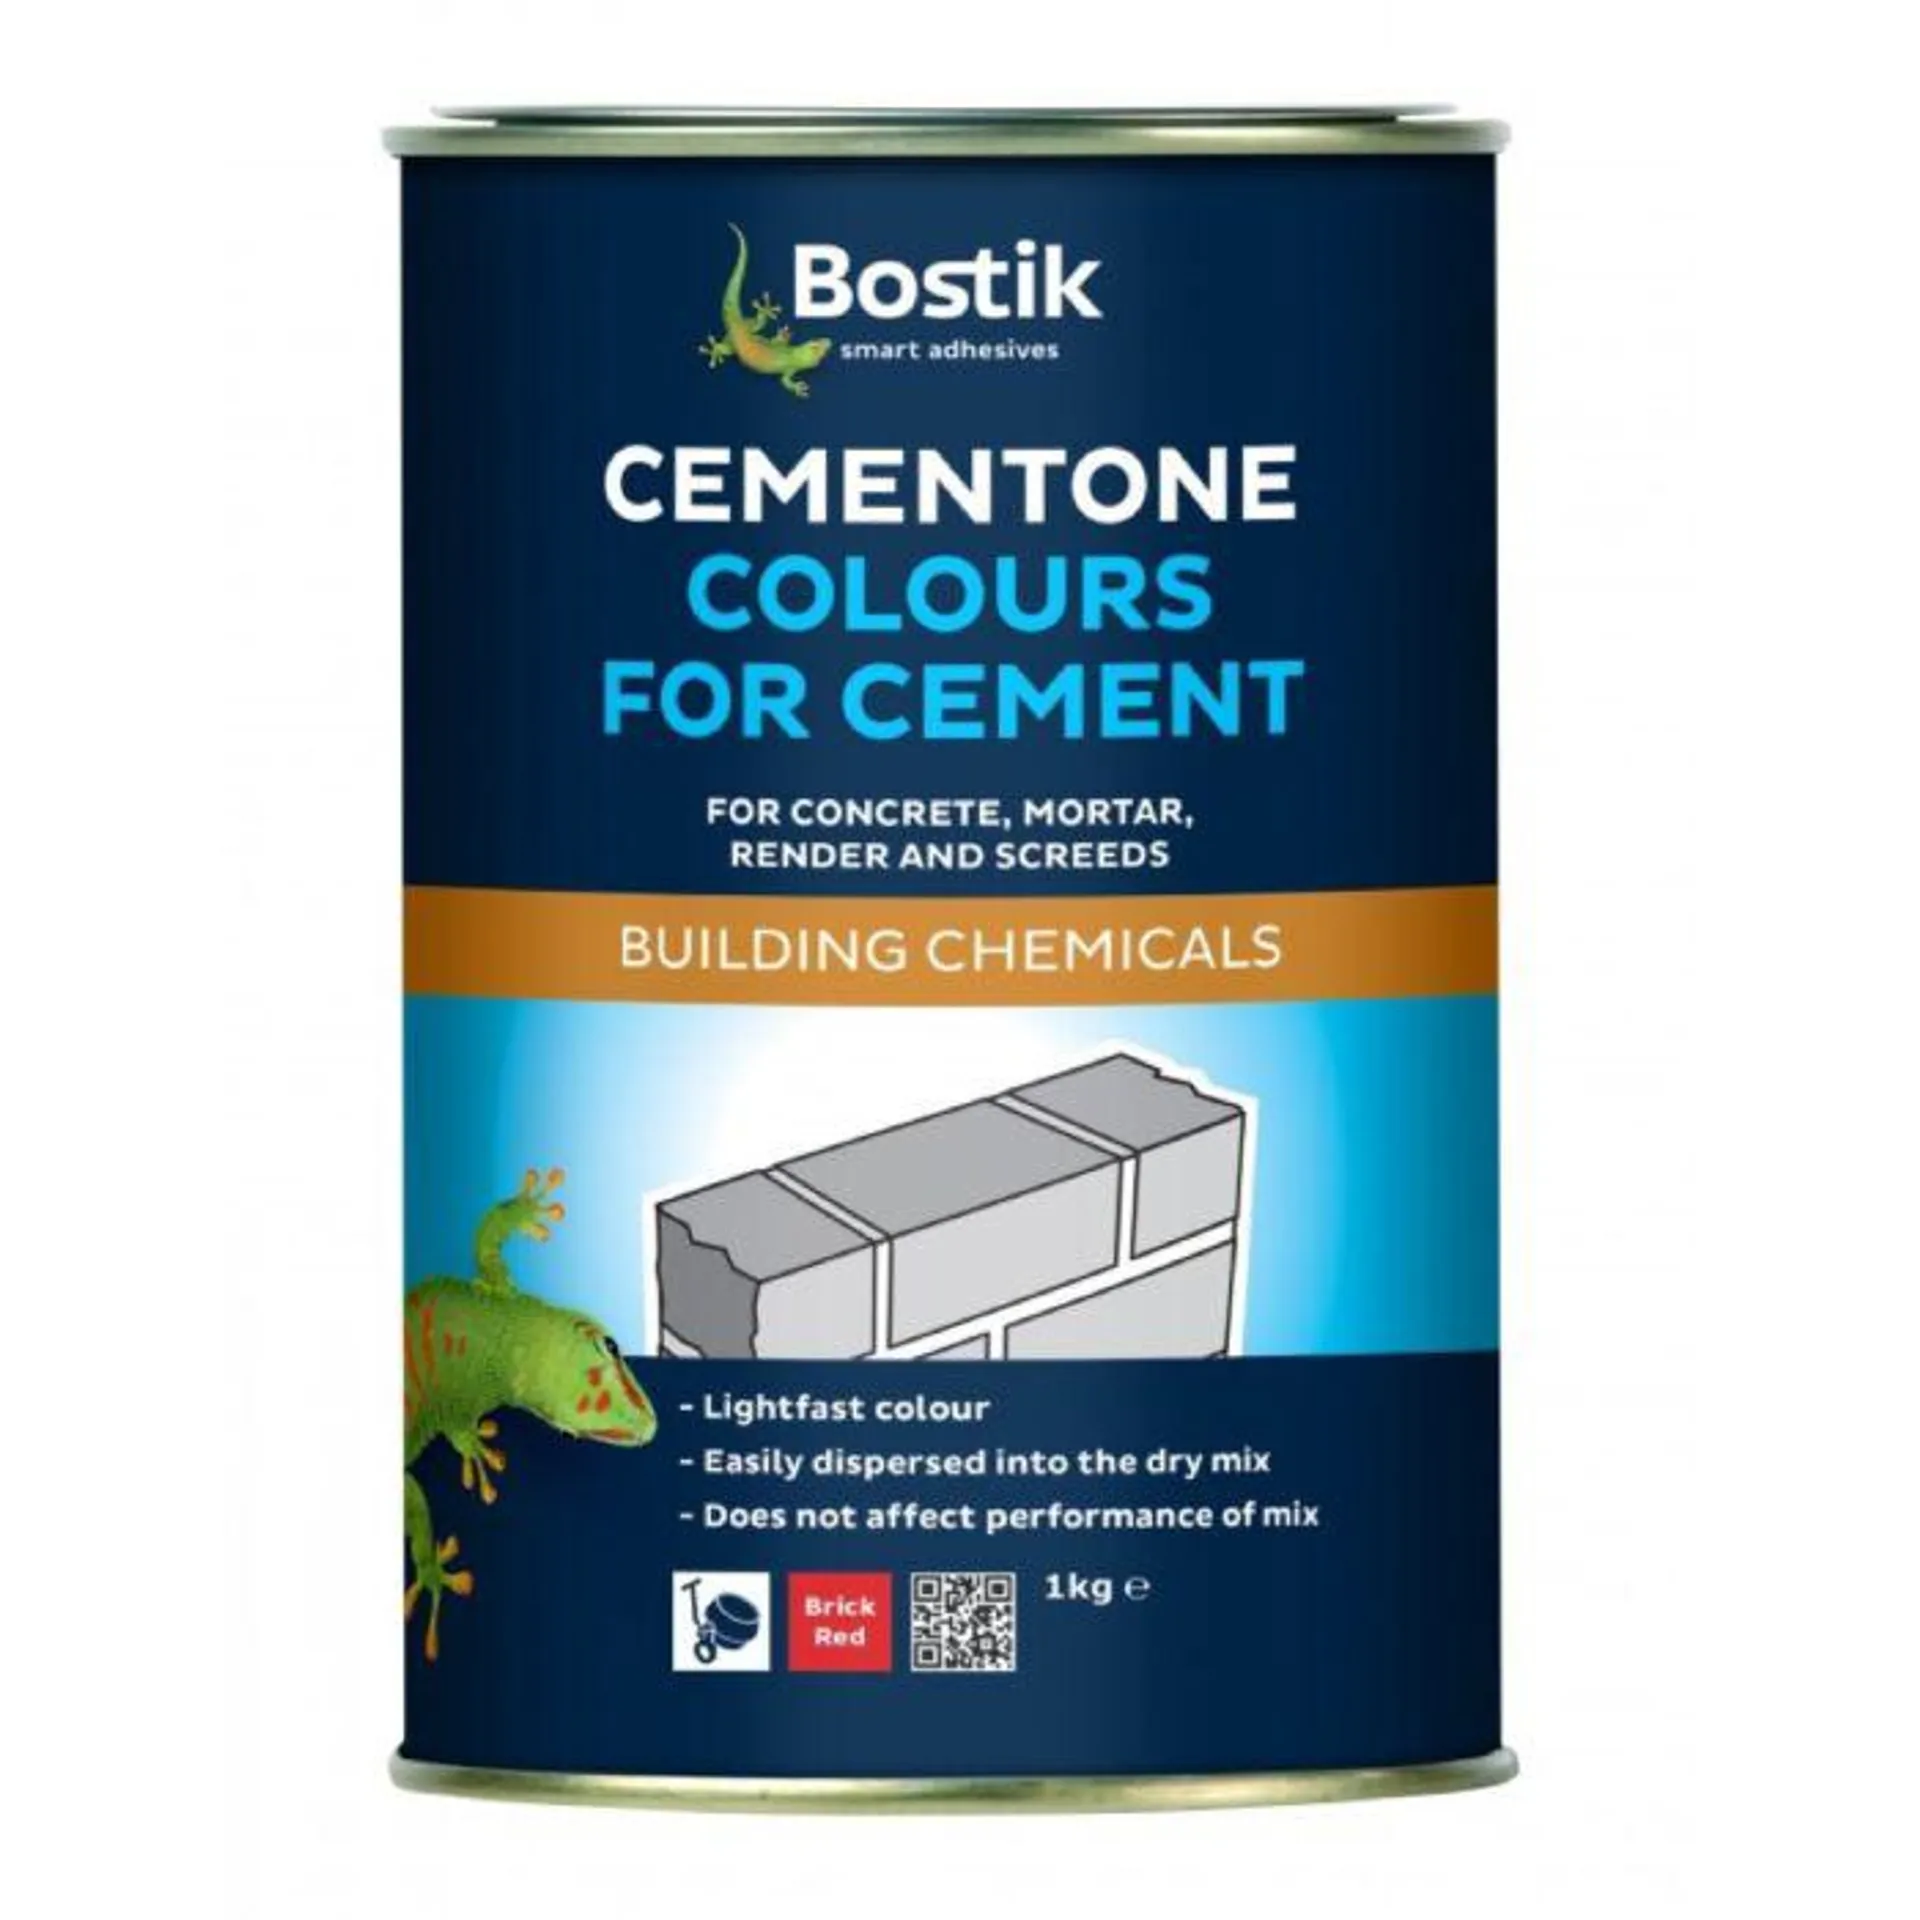 Cementone Brick Red 1kg 30812477